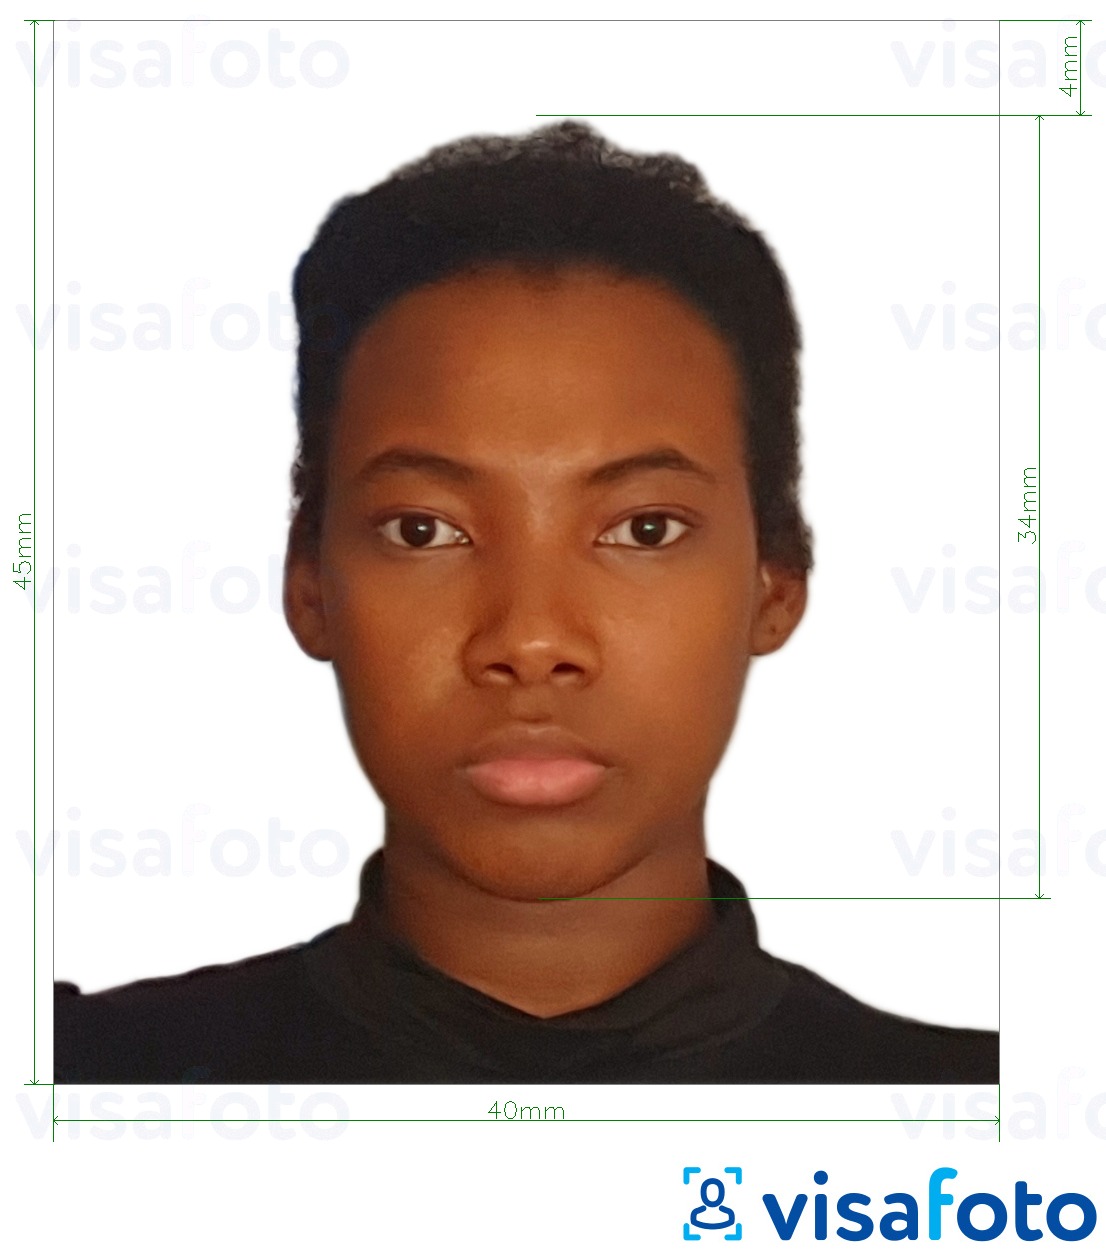 Contoh dari foto untuk Paspor Tanzania 40x45 mm (4x4,5 cm) dengan ukuran spesifikasi yang tepat